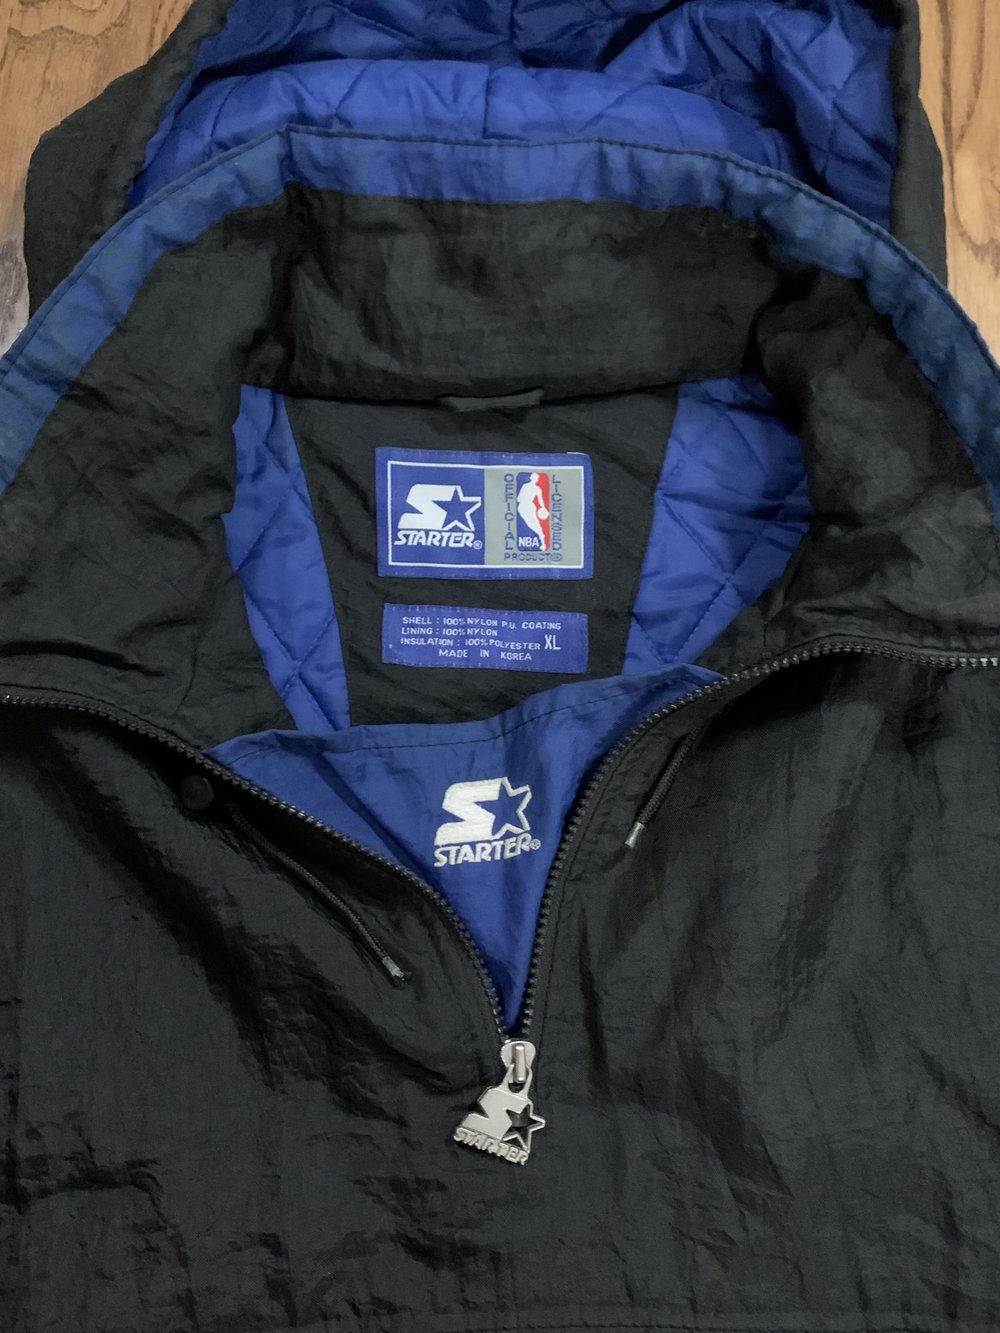 New York Knicks Starter Jacket Size Small Rare Retro Authentic Vintage VTG